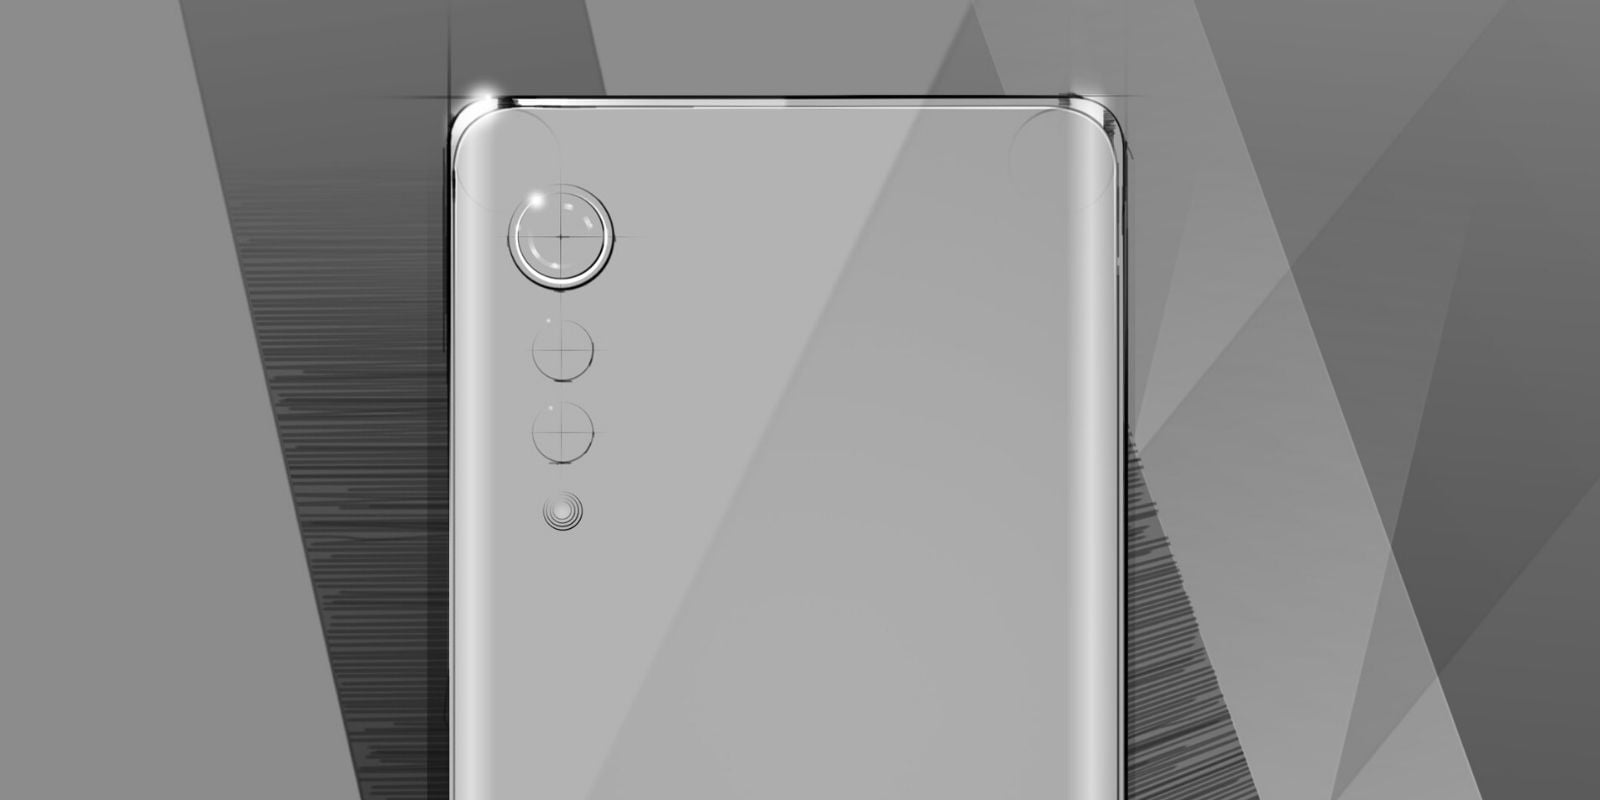 LG new water-drop phone design